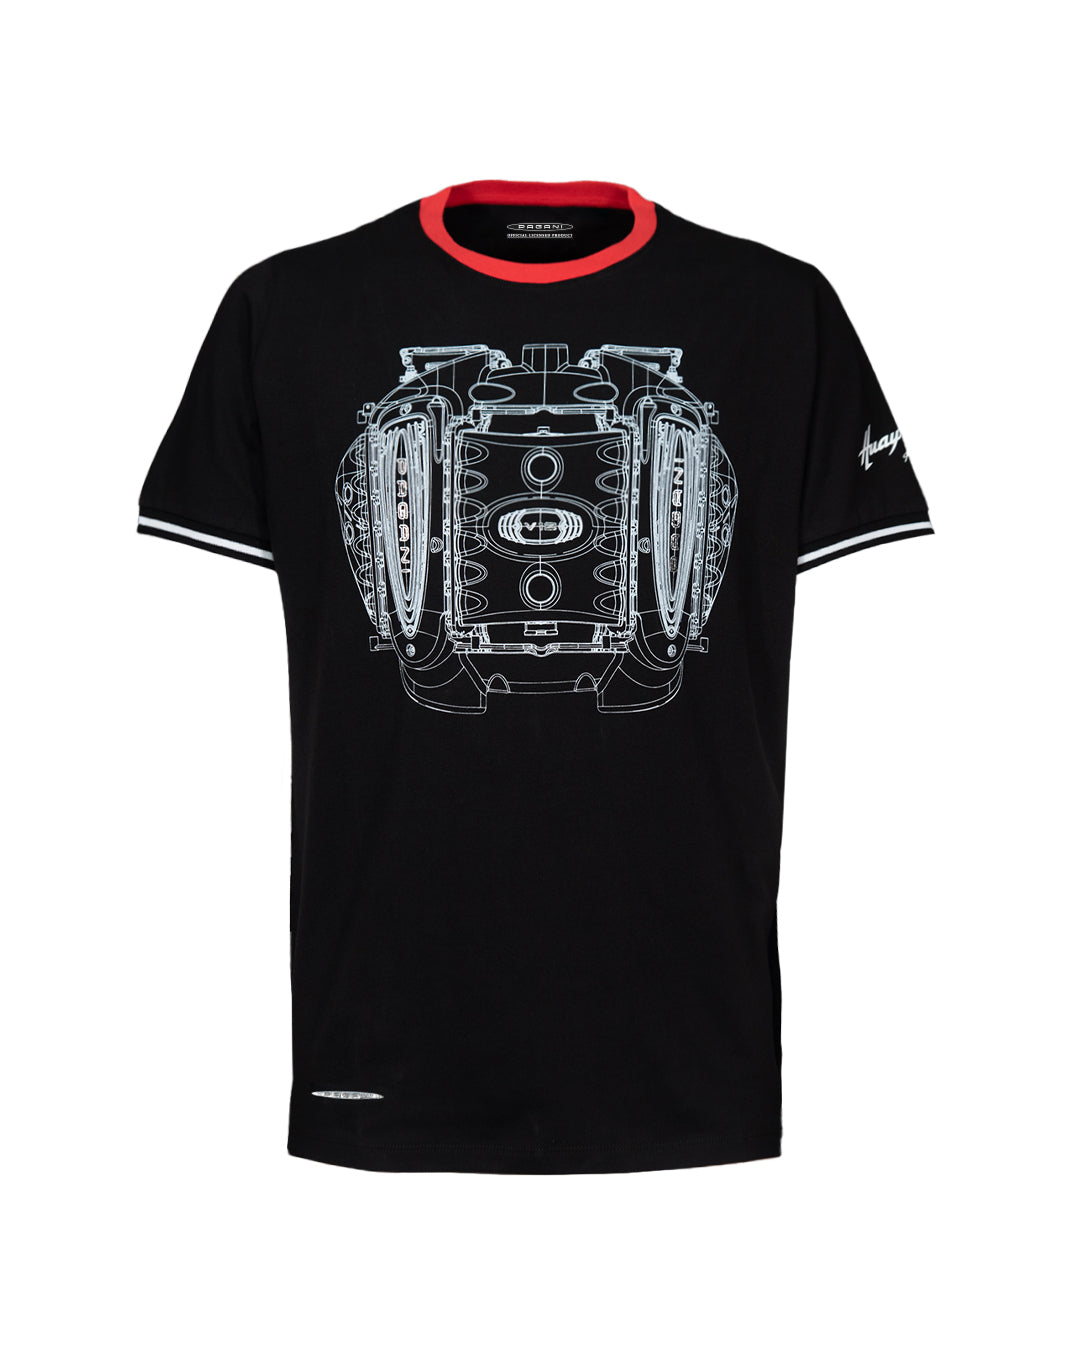 Pagani “Huayra Roadster BC” Engine T-Shirt Man Black